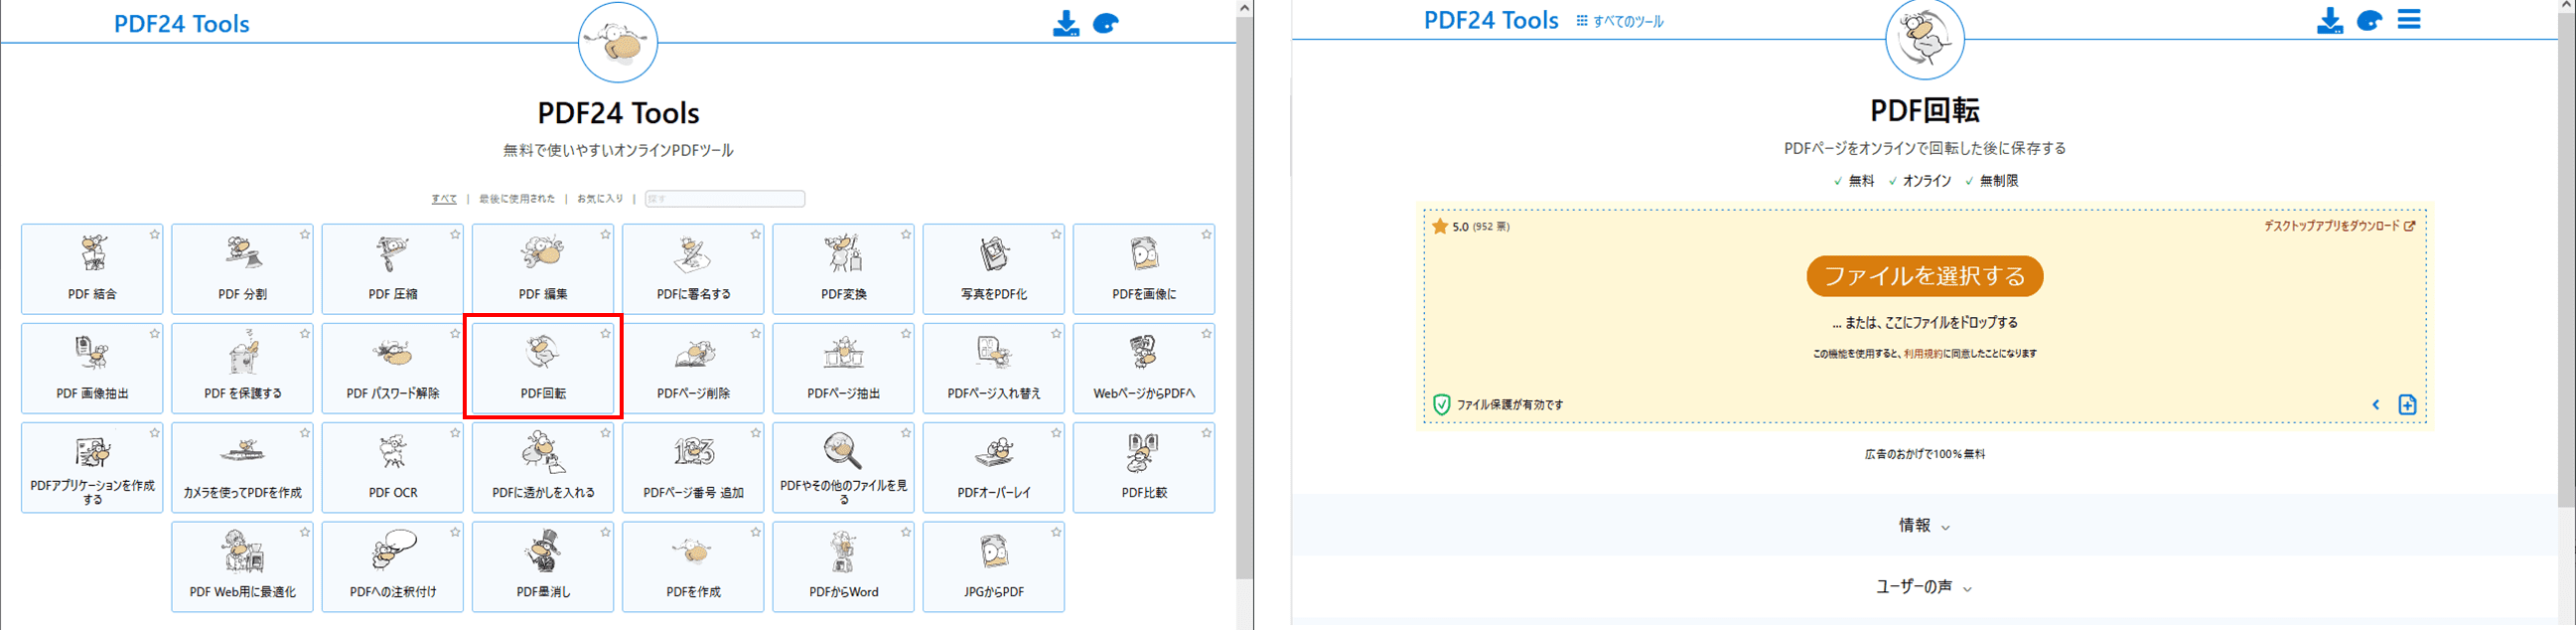 PDF回転オンラインツールPDF24